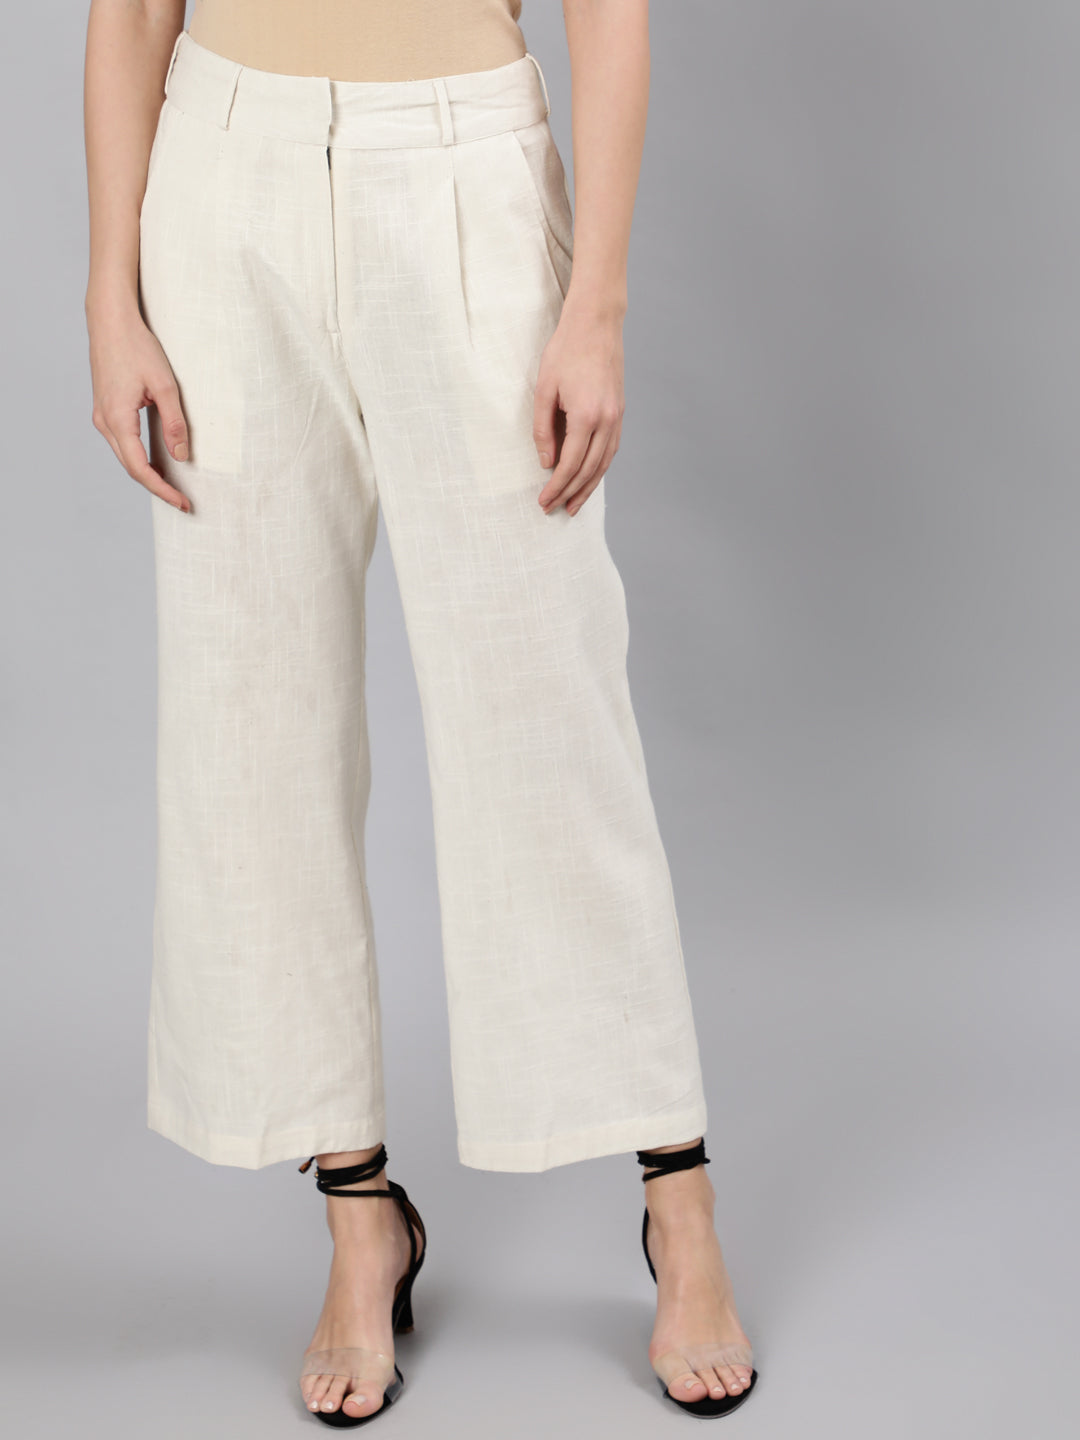 Buy White Trousers & Pants for Women by JAIPURATTIRE Online